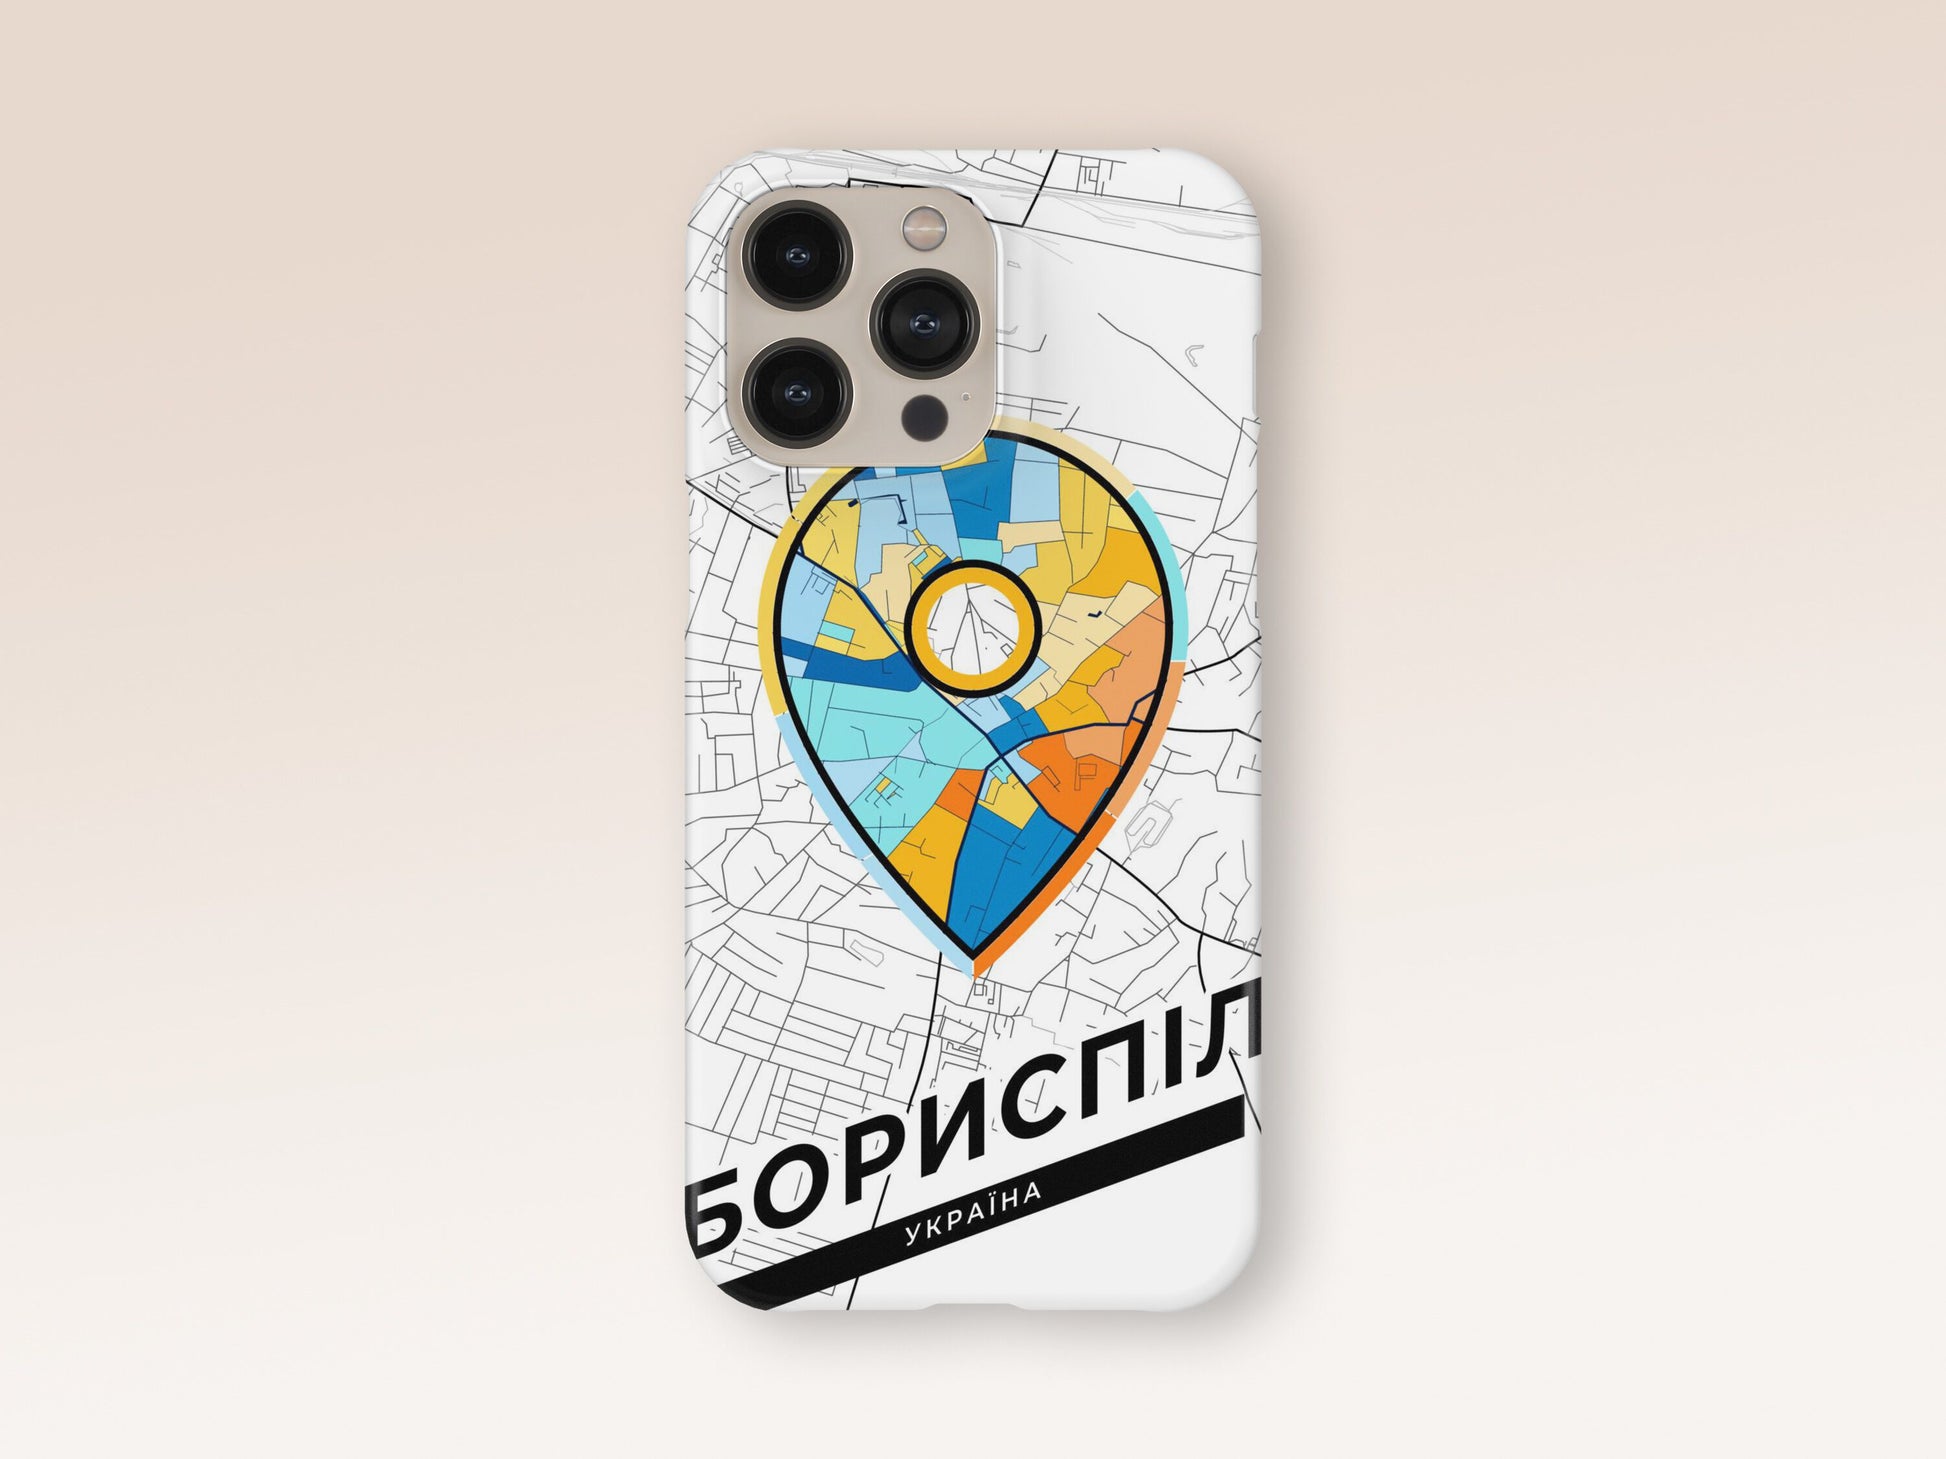 Boryspil Ukraine slim phone case with colorful icon. Birthday, wedding or housewarming gift. Couple match cases. 1